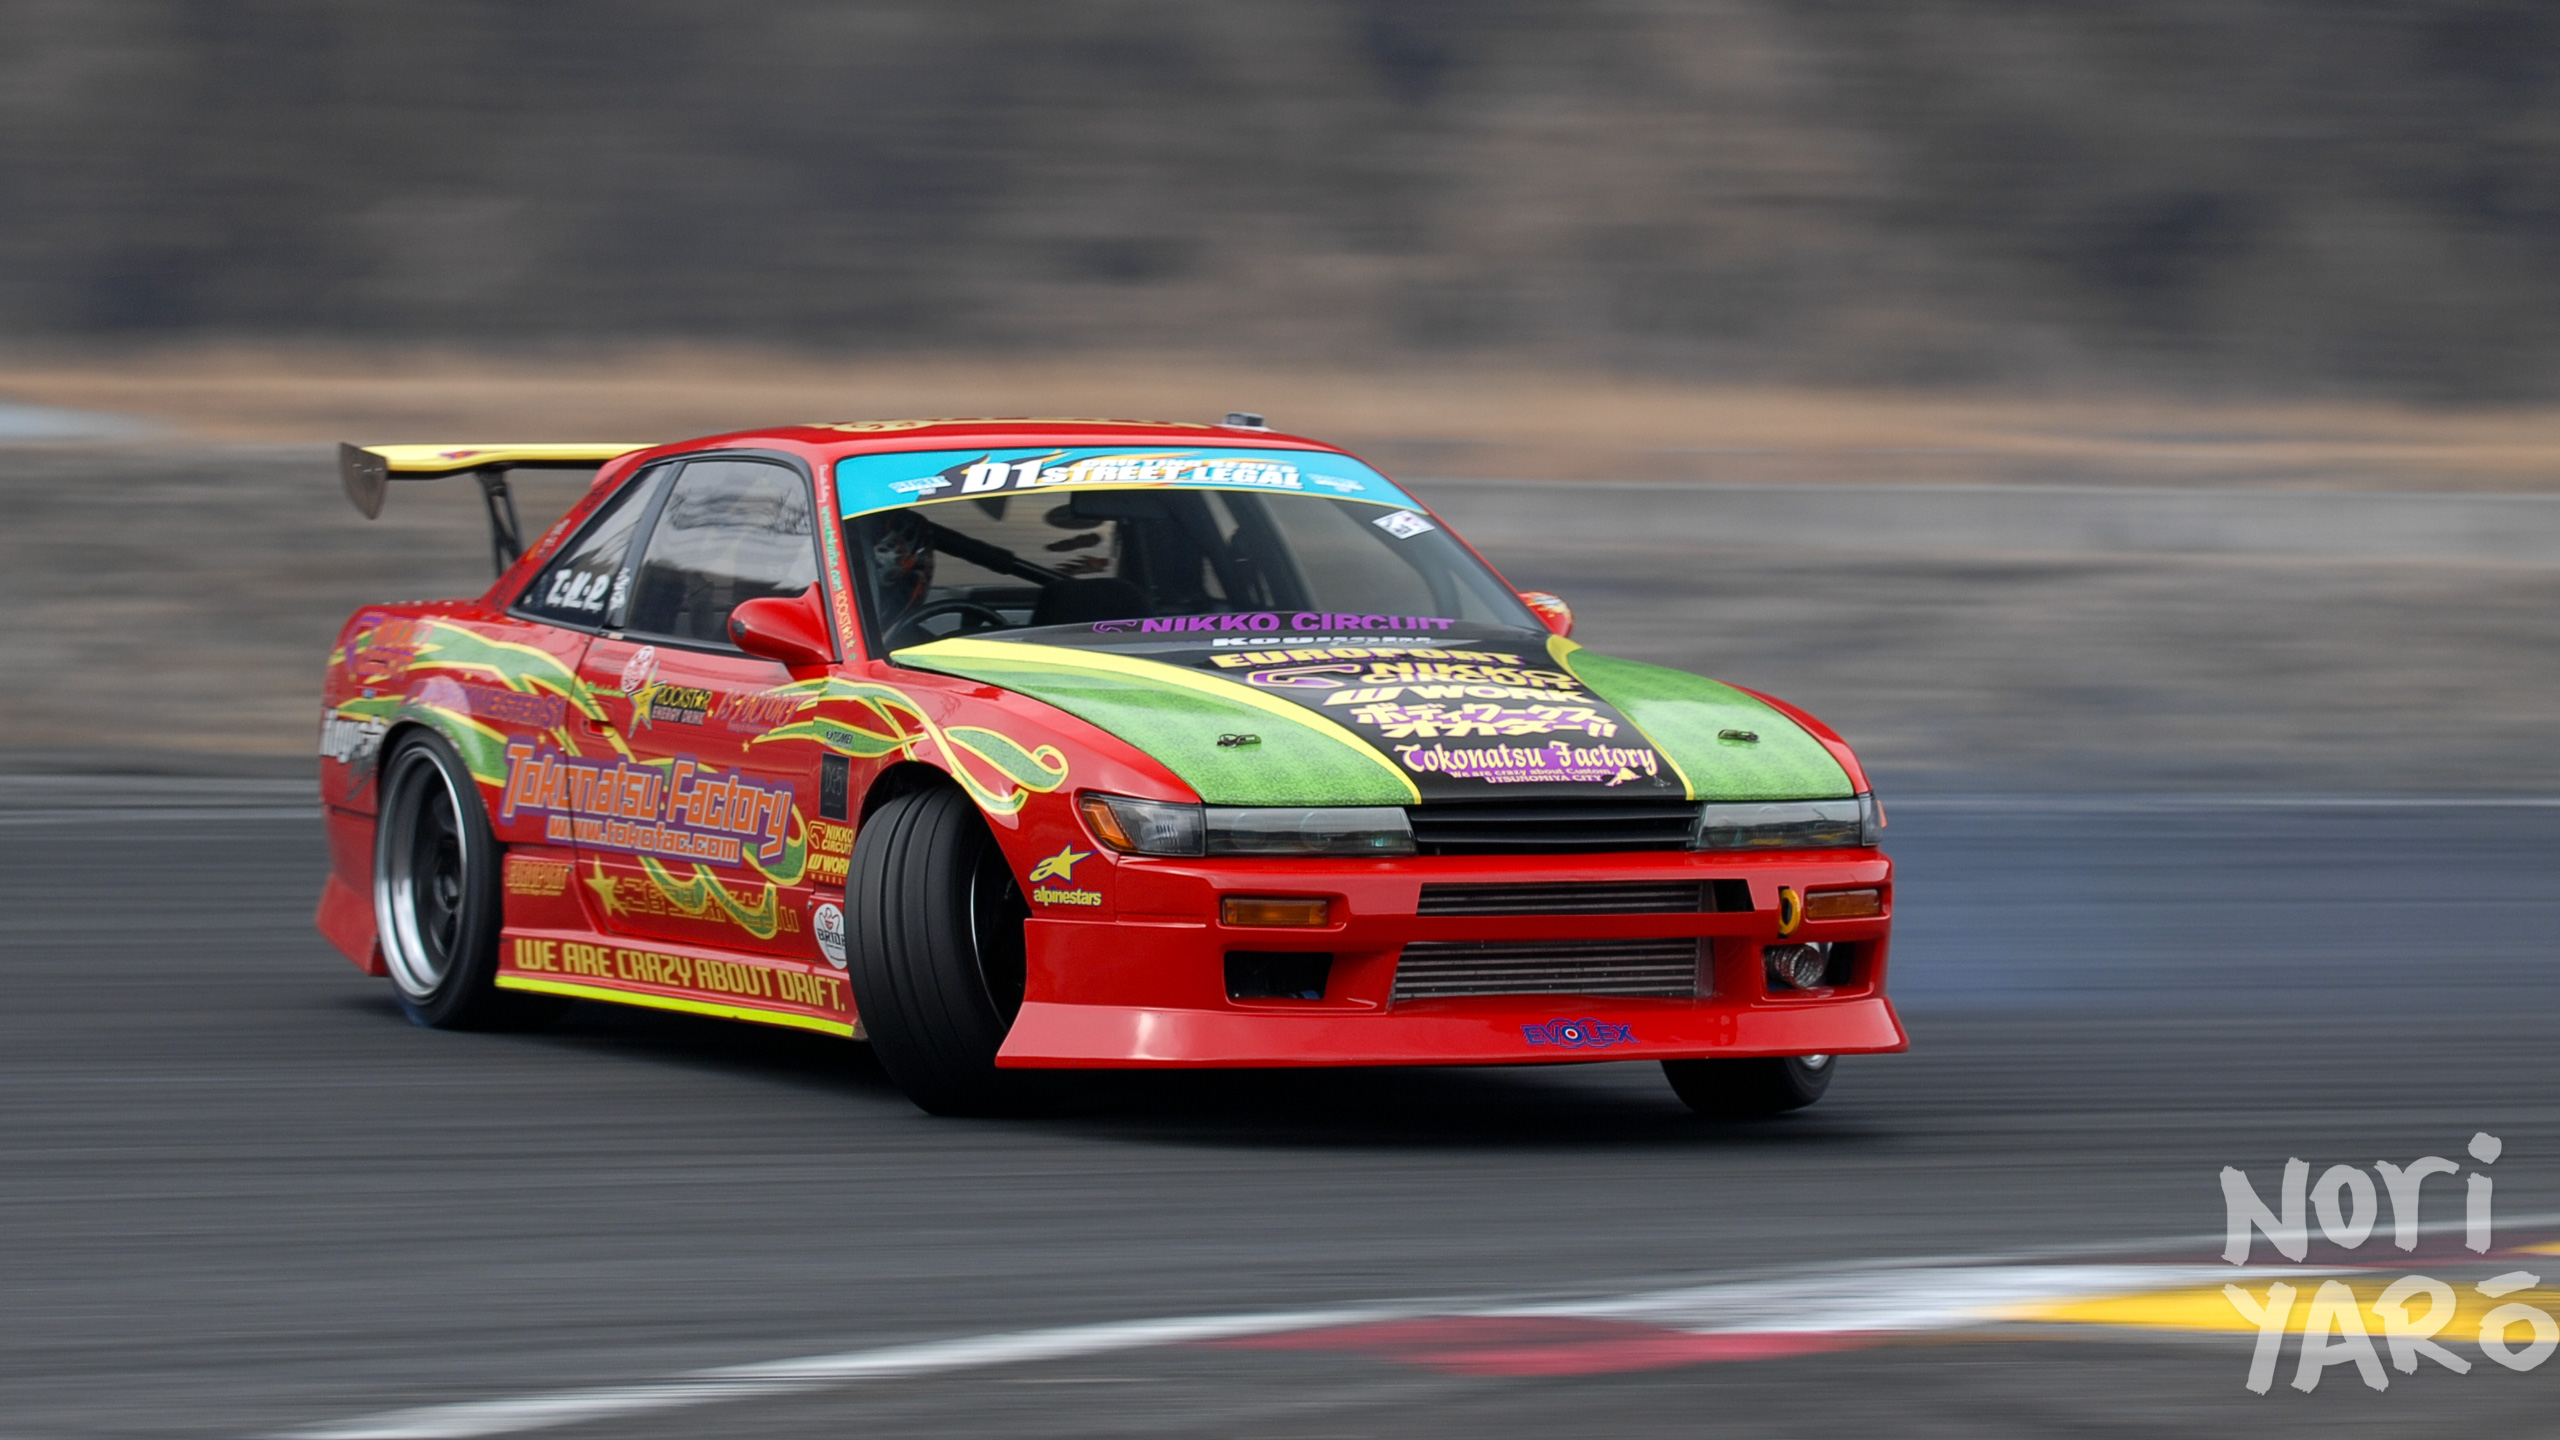 General 2560x1440 car Japanese cars sports car drift cars drift circuit race tracks Nissan Silvia S13 red cars race cars car spoiler livery